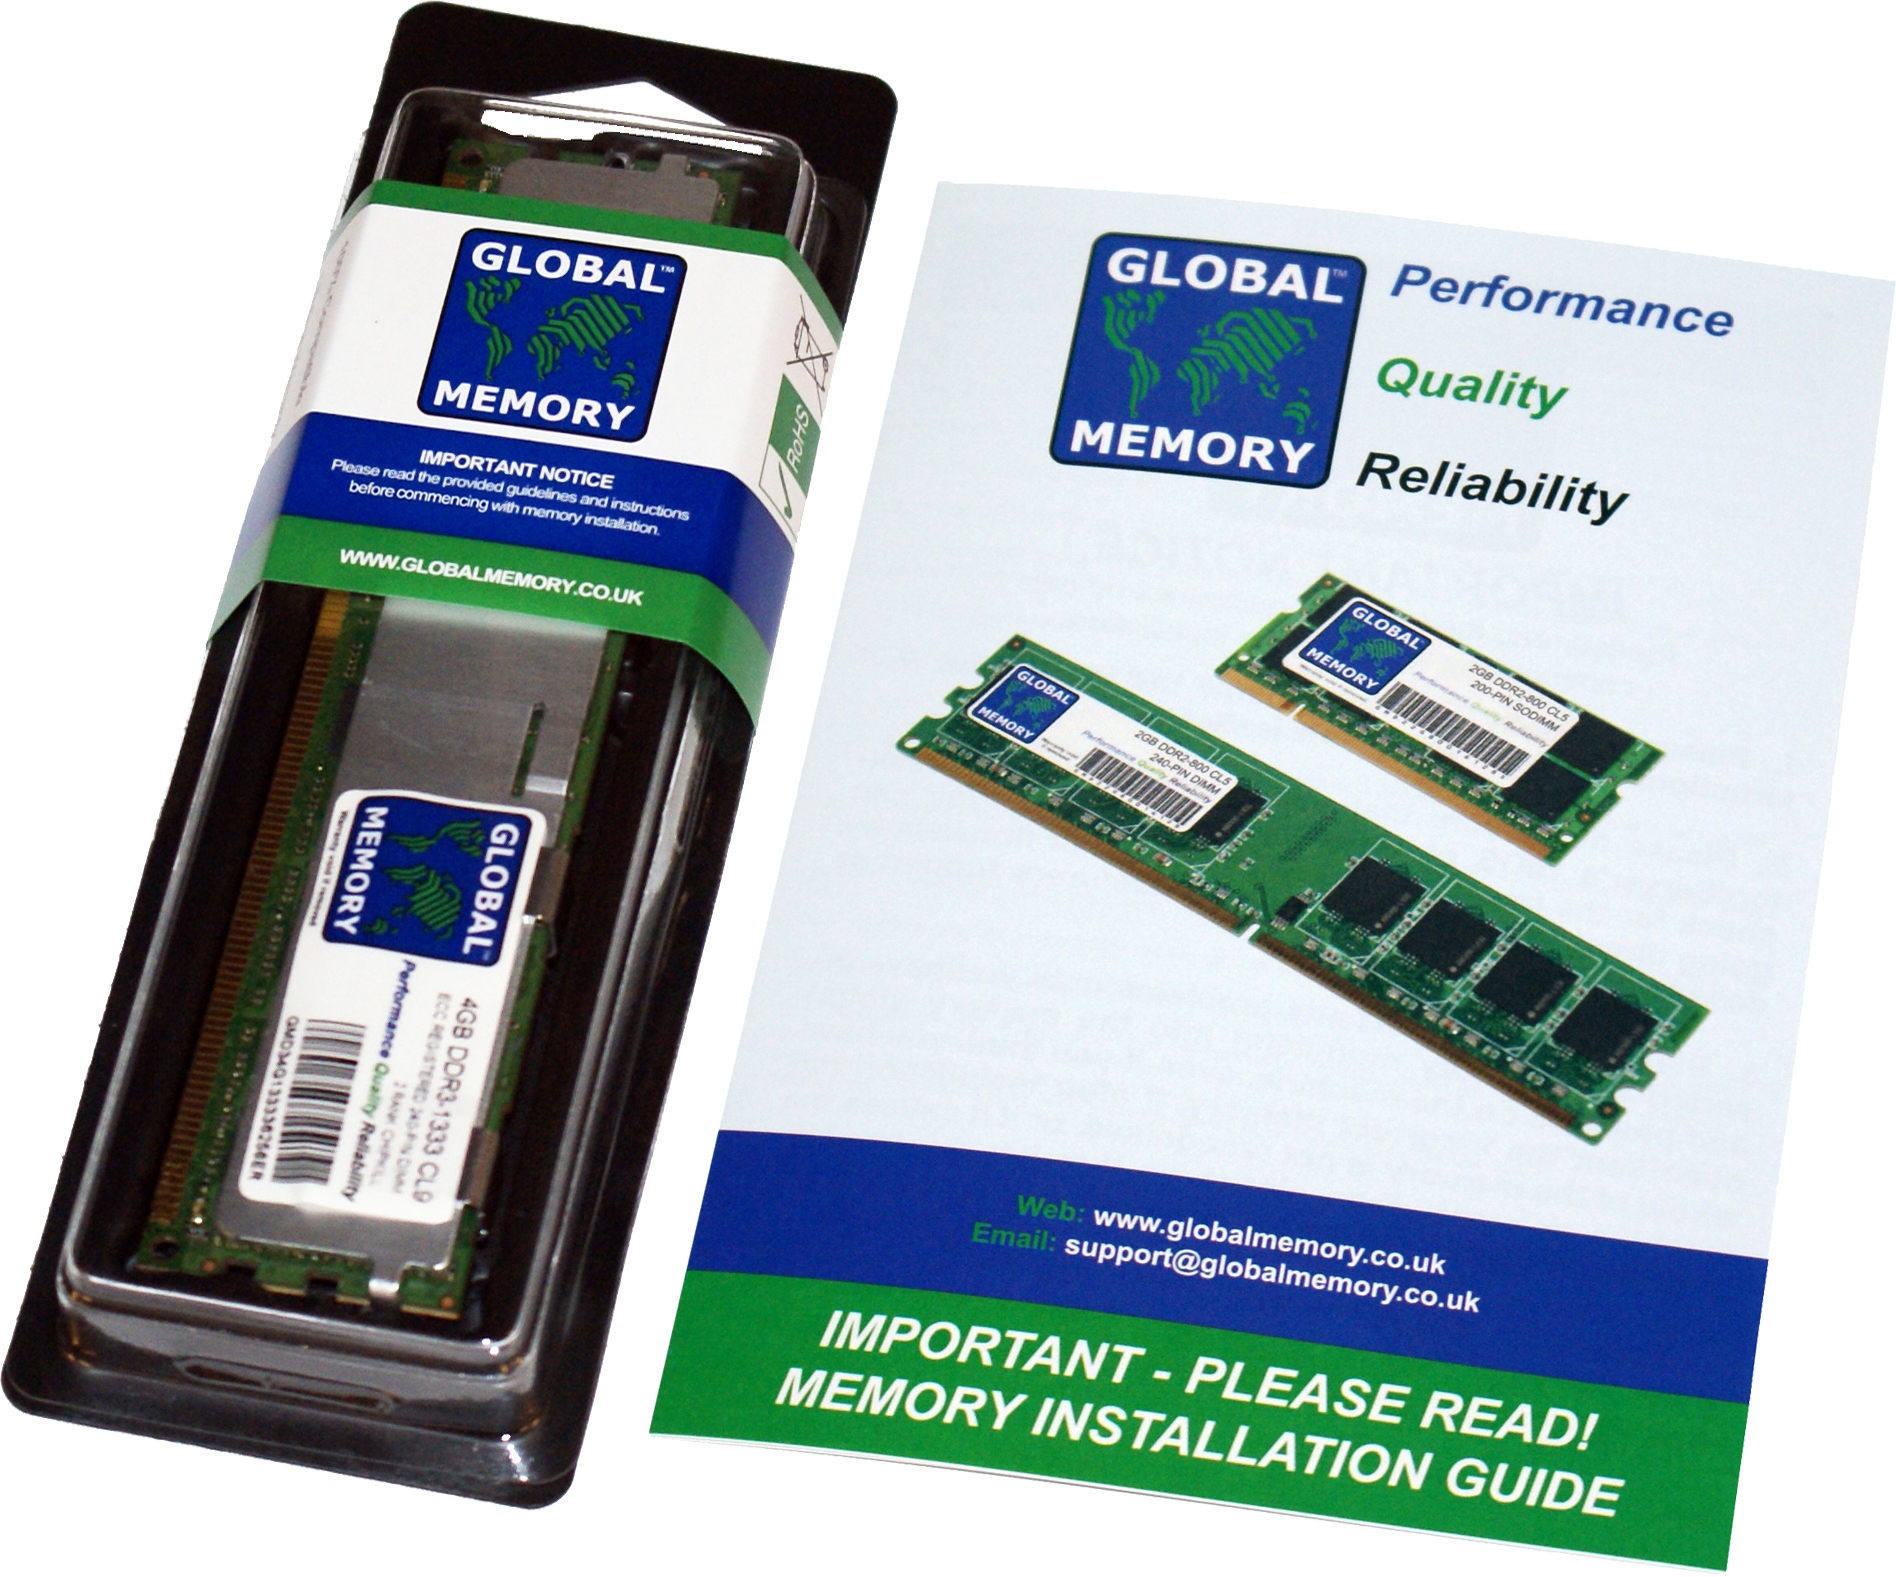 16GB DDR3 1333MHz PC3-10600 240-PIN ECC REGISTERED DIMM (RDIMM) MEMORY RAM FOR HEWLETT-PACKARD SERVERS/WORKSTATIONS (4 RANK NON-CHIPKILL)